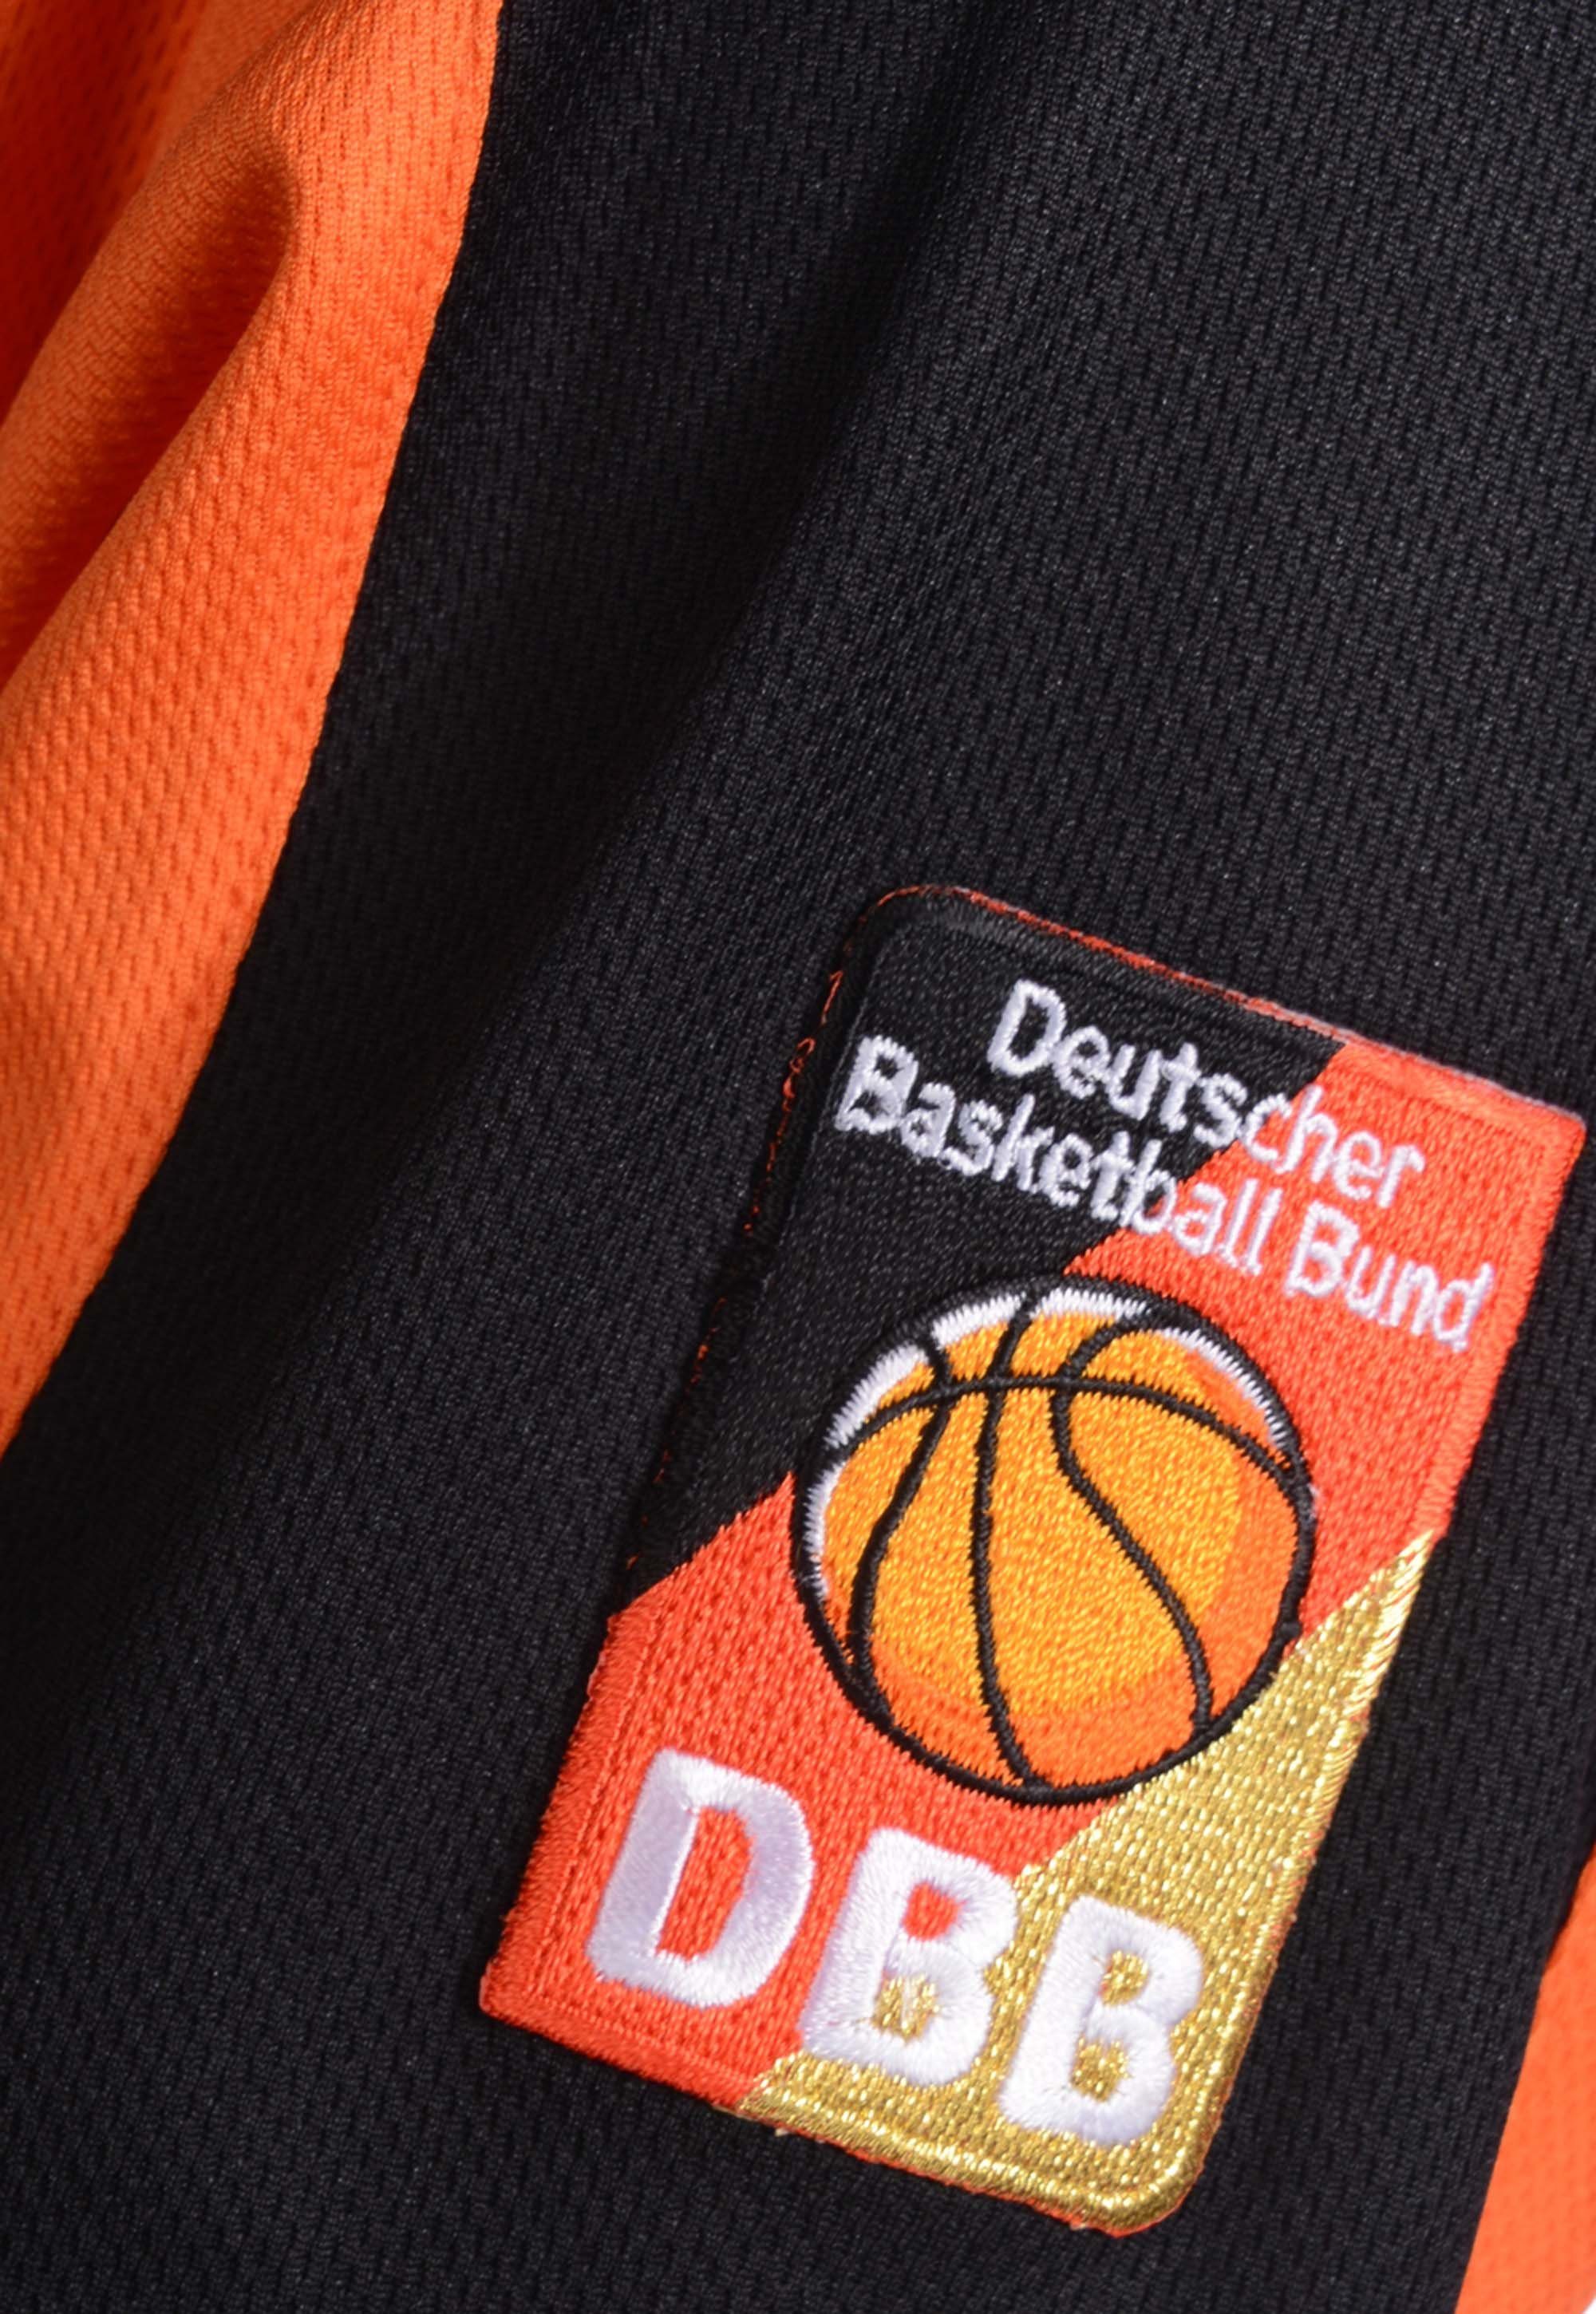 Logo Tragekomfort PEAK orange-schwarz mit DBB hohem Basketballtrikot 2.0